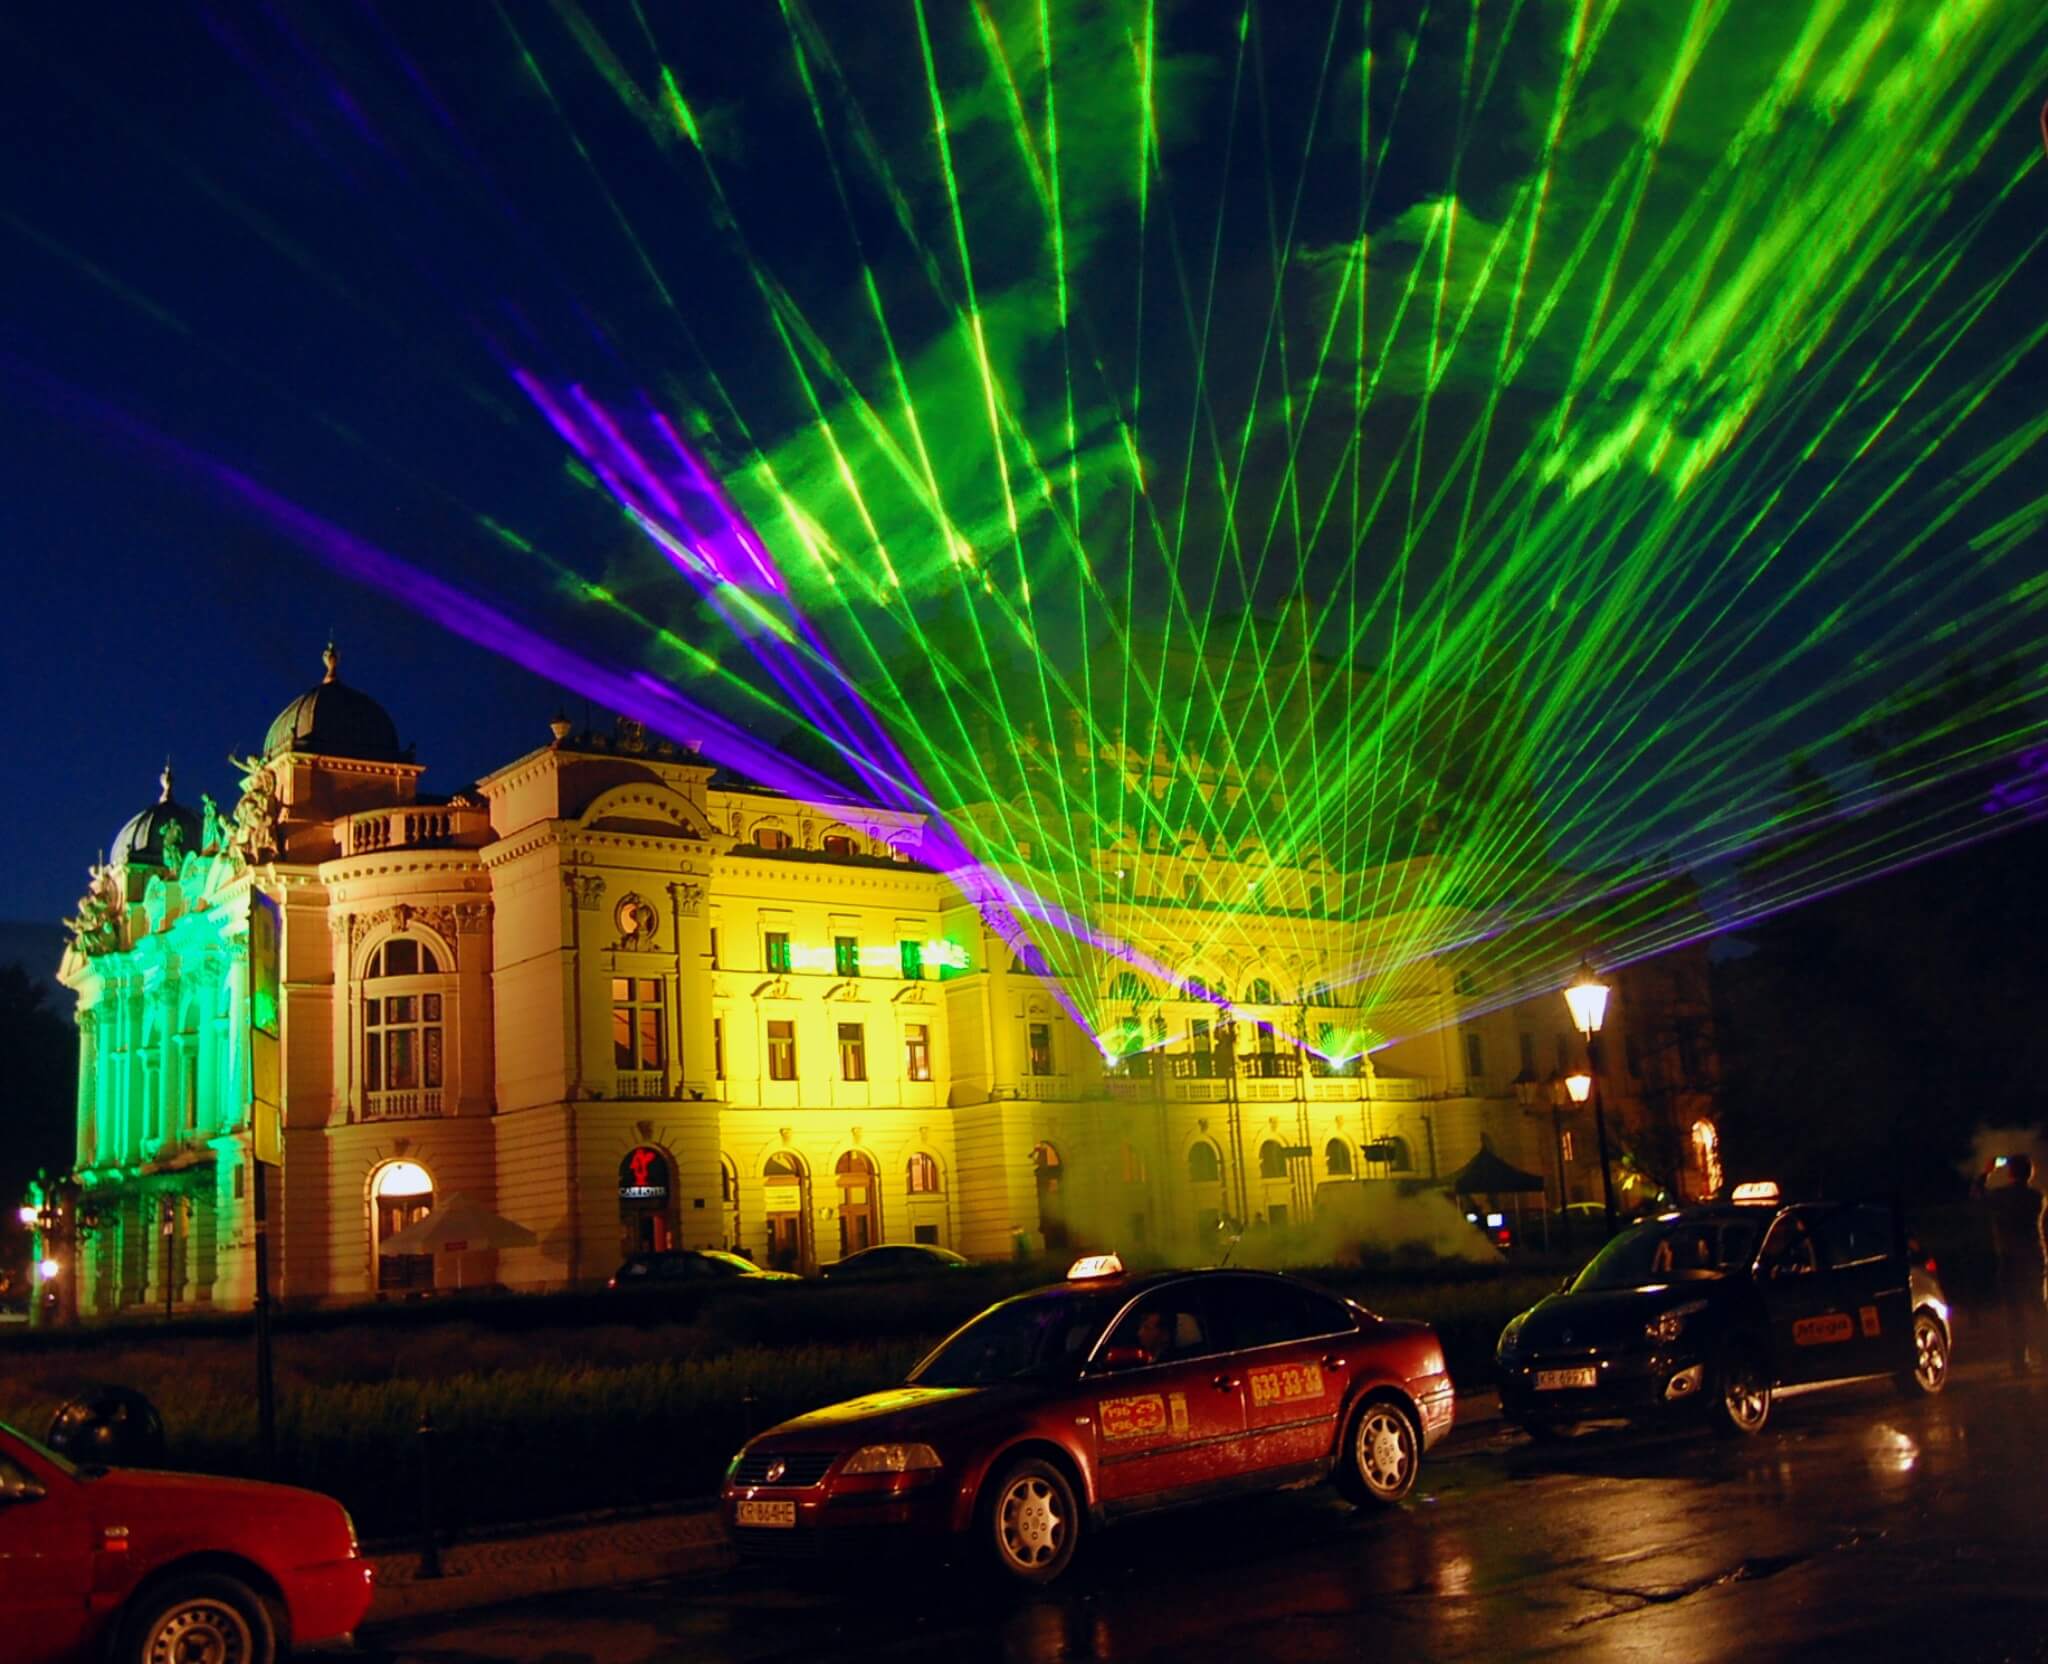 NewFeel Lasers lights show